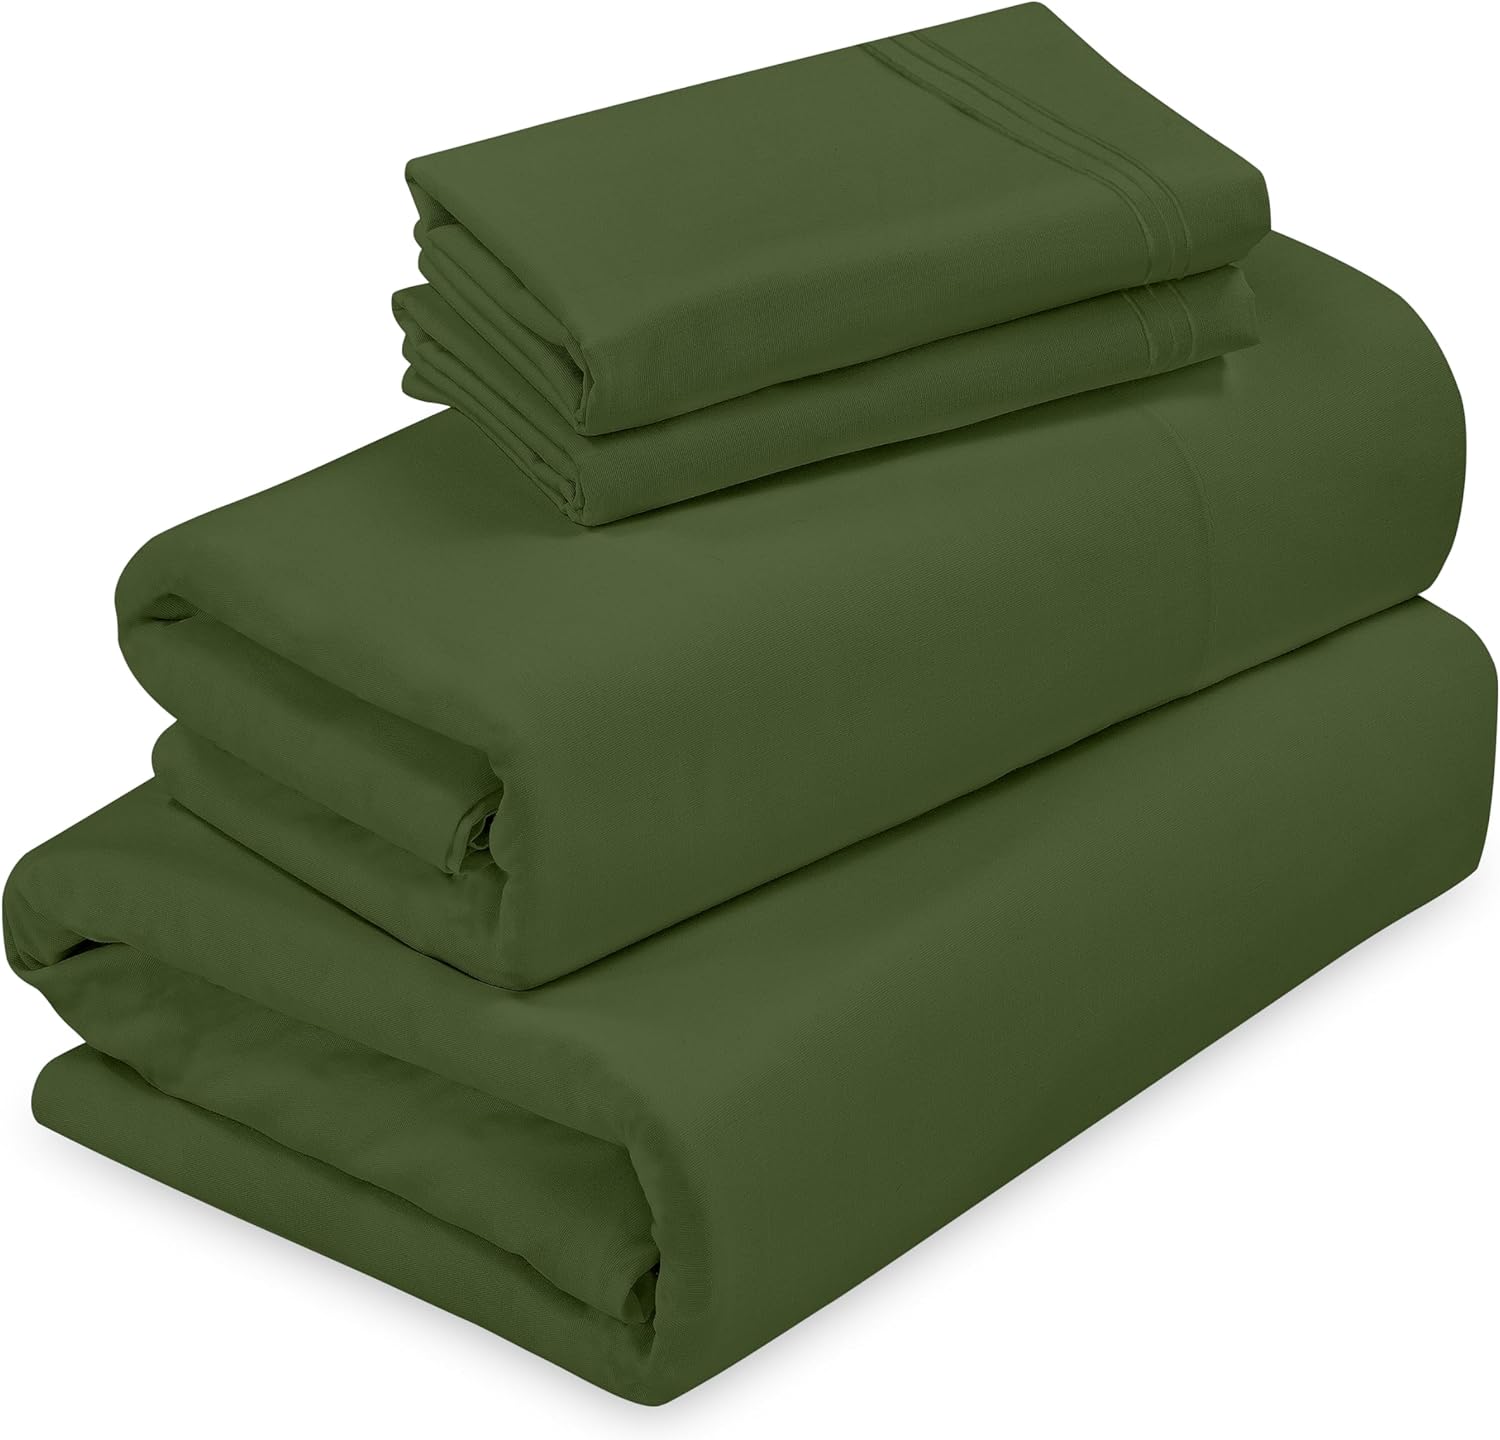 ROYALE LINENS - 4 Piece Queen Bed Sheet - Soft Brushed Microfiber 1800 Bedding Set - 1 Fitted Sheet, 1 Flat Sheet, 2 Pillow Case - Wrinkle & Fade Resistant - Queen Size Sheet Set (Queen, Hunter Green)